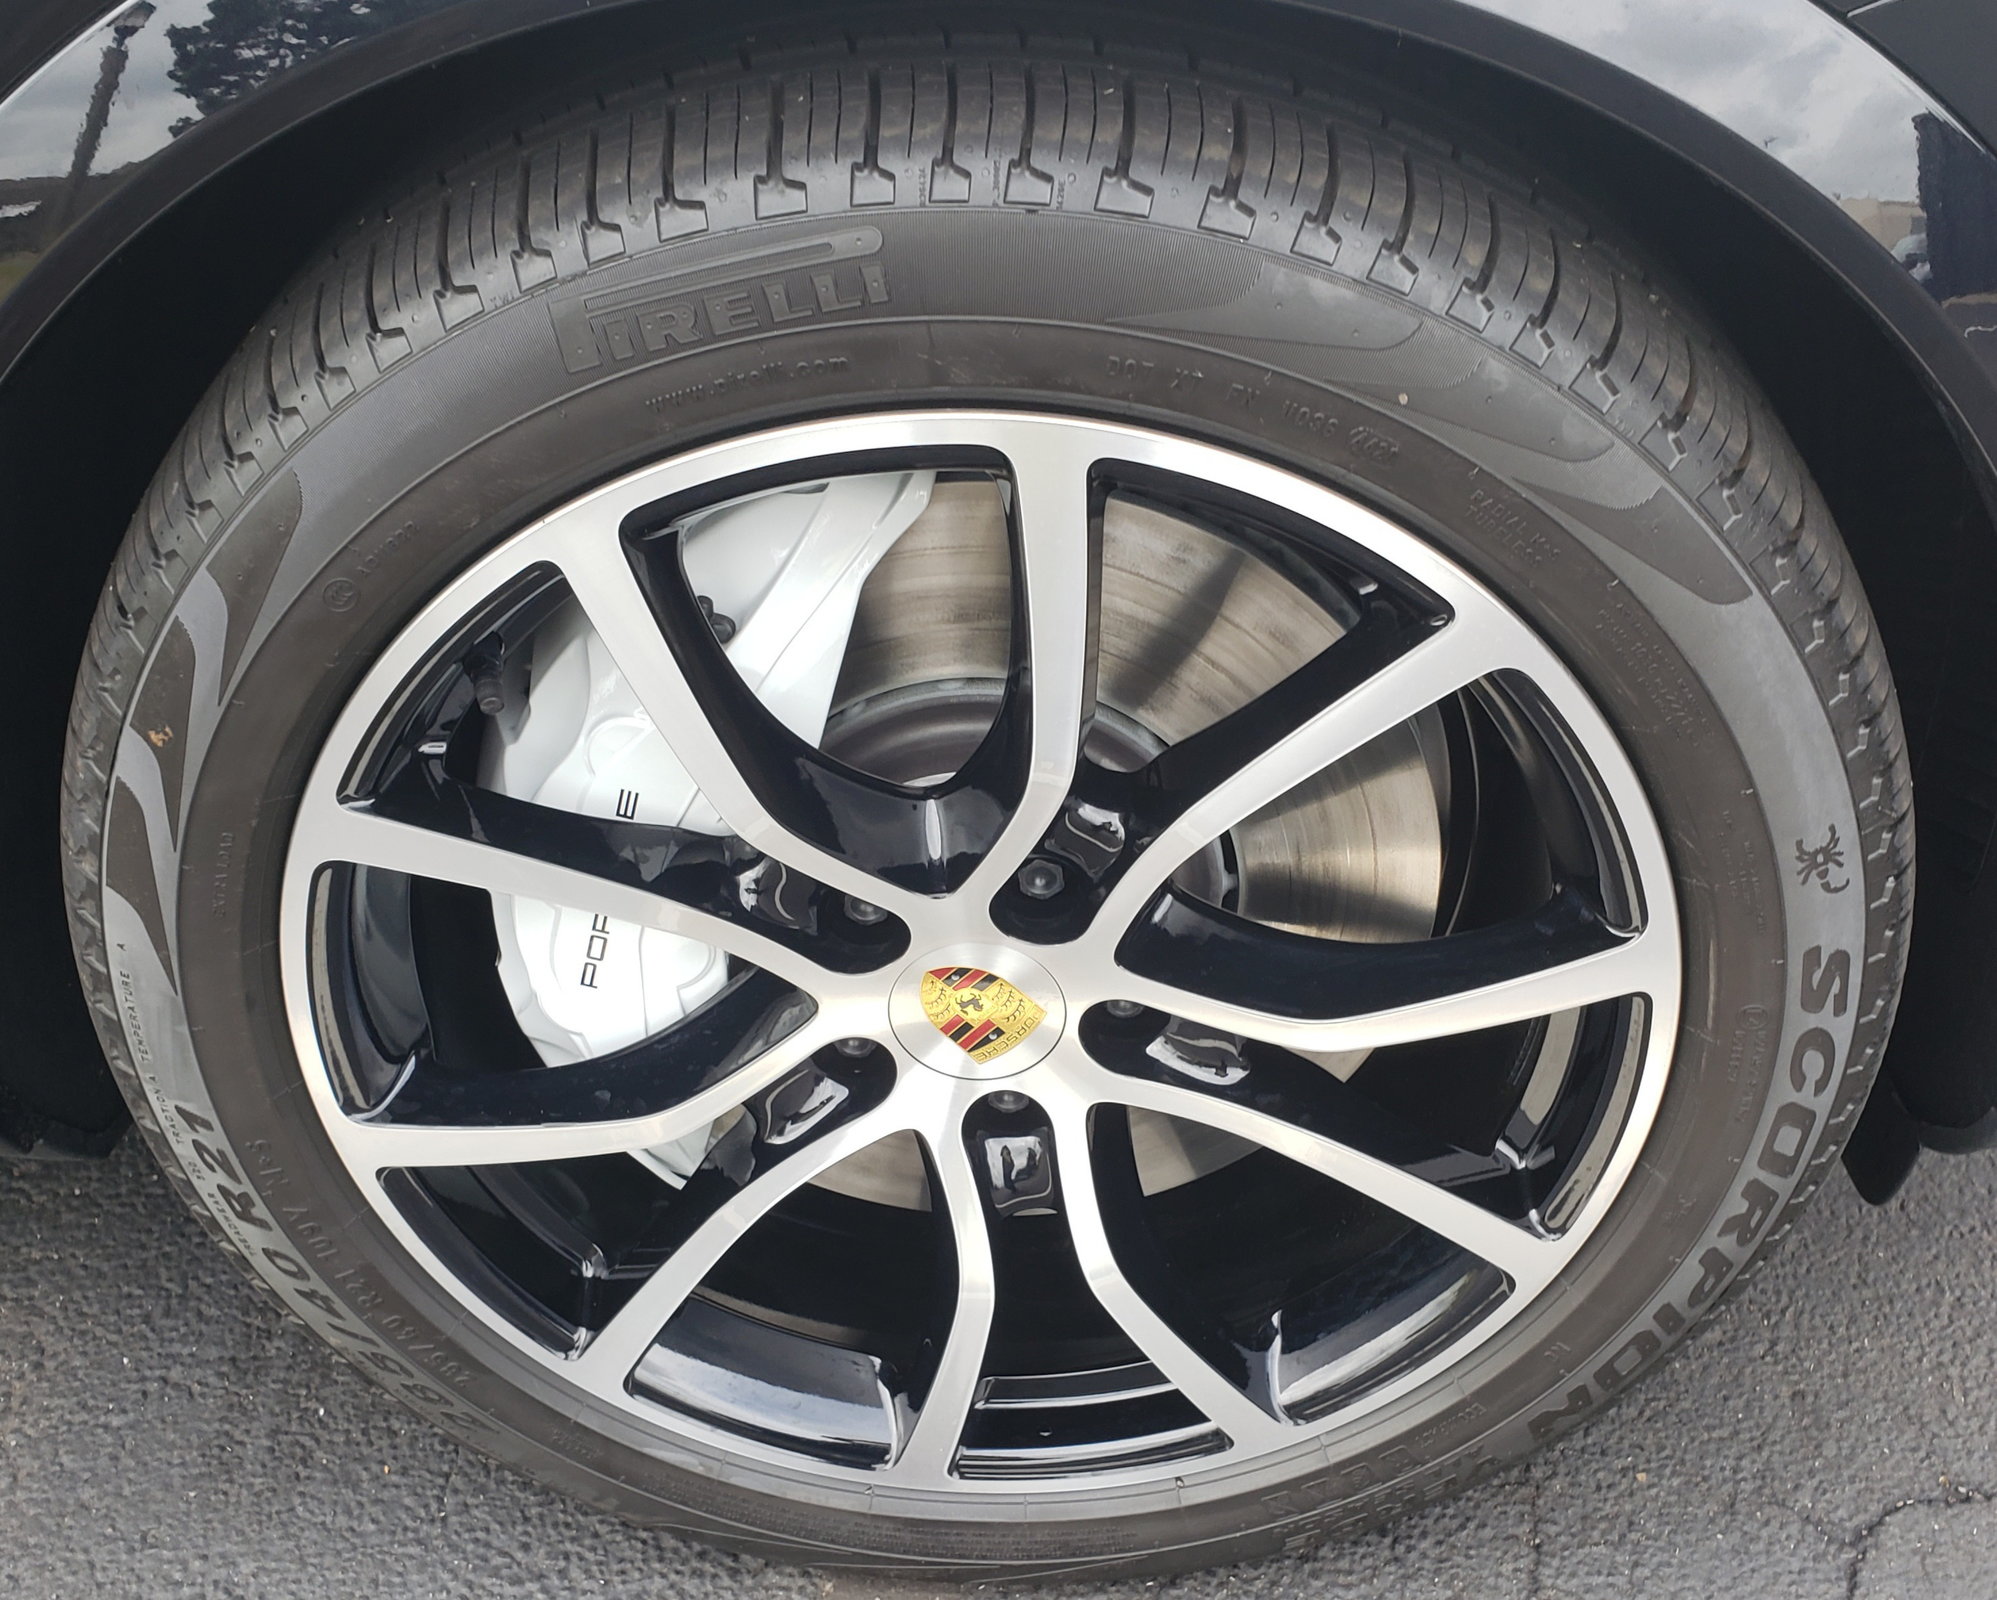 Wheels and Tires/Axles - Cayenne E3/9Y0 21 " OEM Set Exclusive Design Wheels Jet Blk Metallic - Used - 2011 to 2021 Porsche Cayenne - Orlando, FL 32803, United States